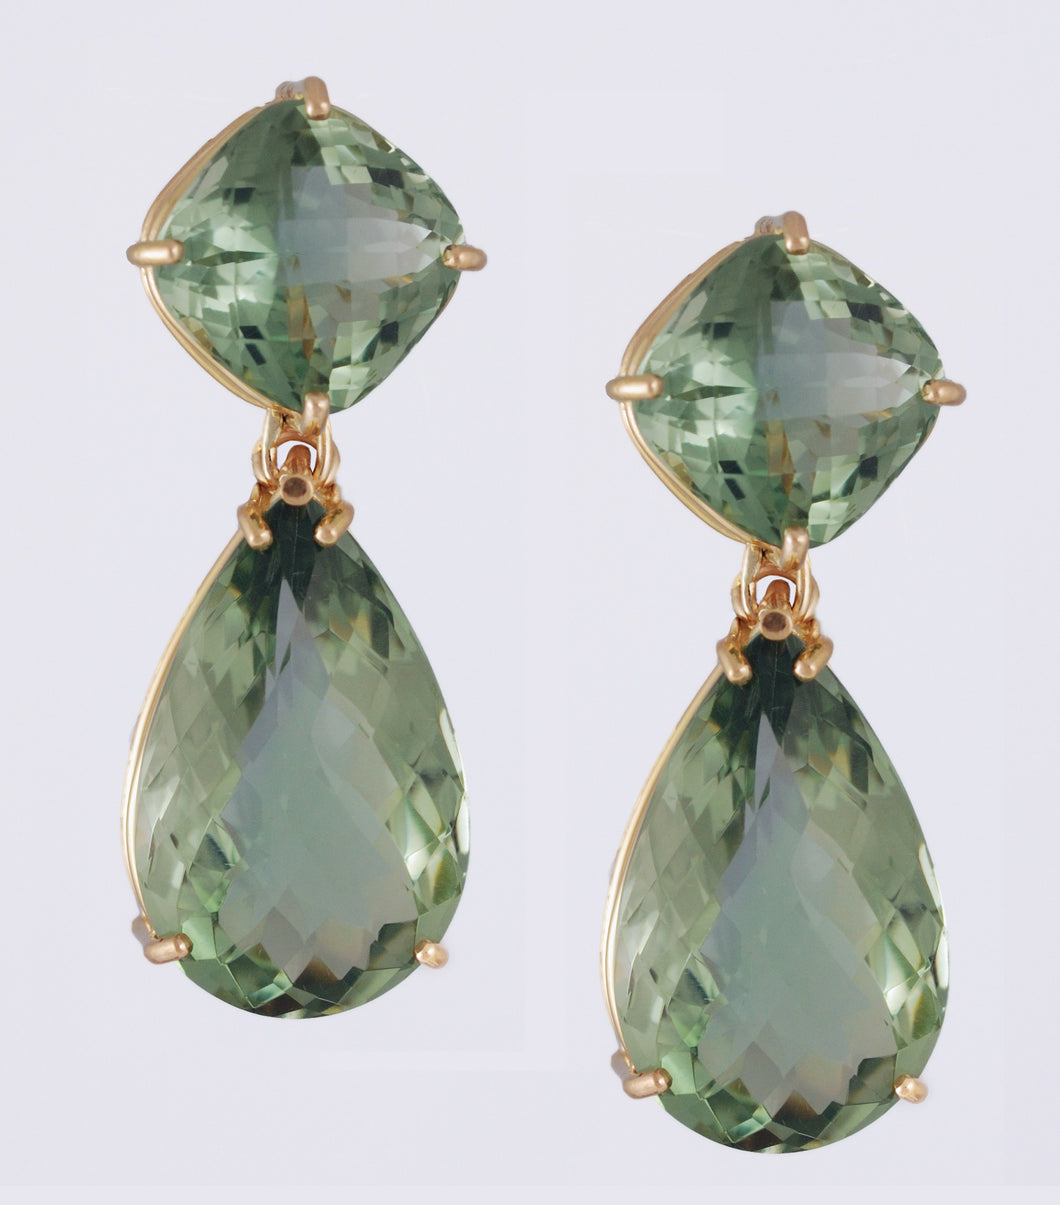 Green Quartz Earrings in 18k gold